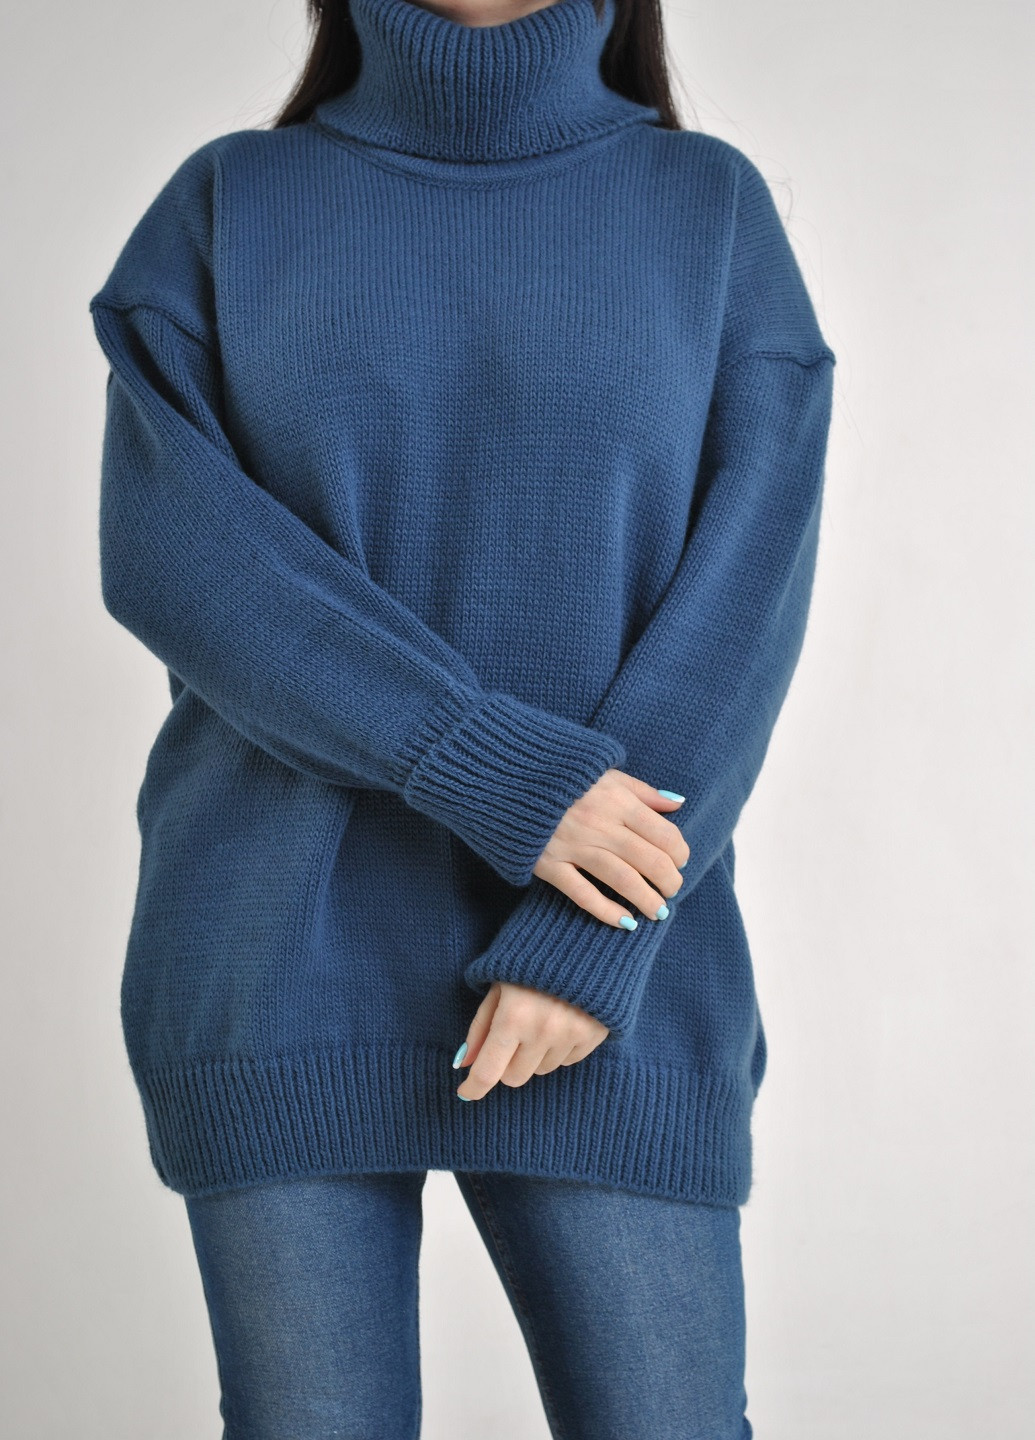 Синий зимний удлиненный свитер Fashion Club